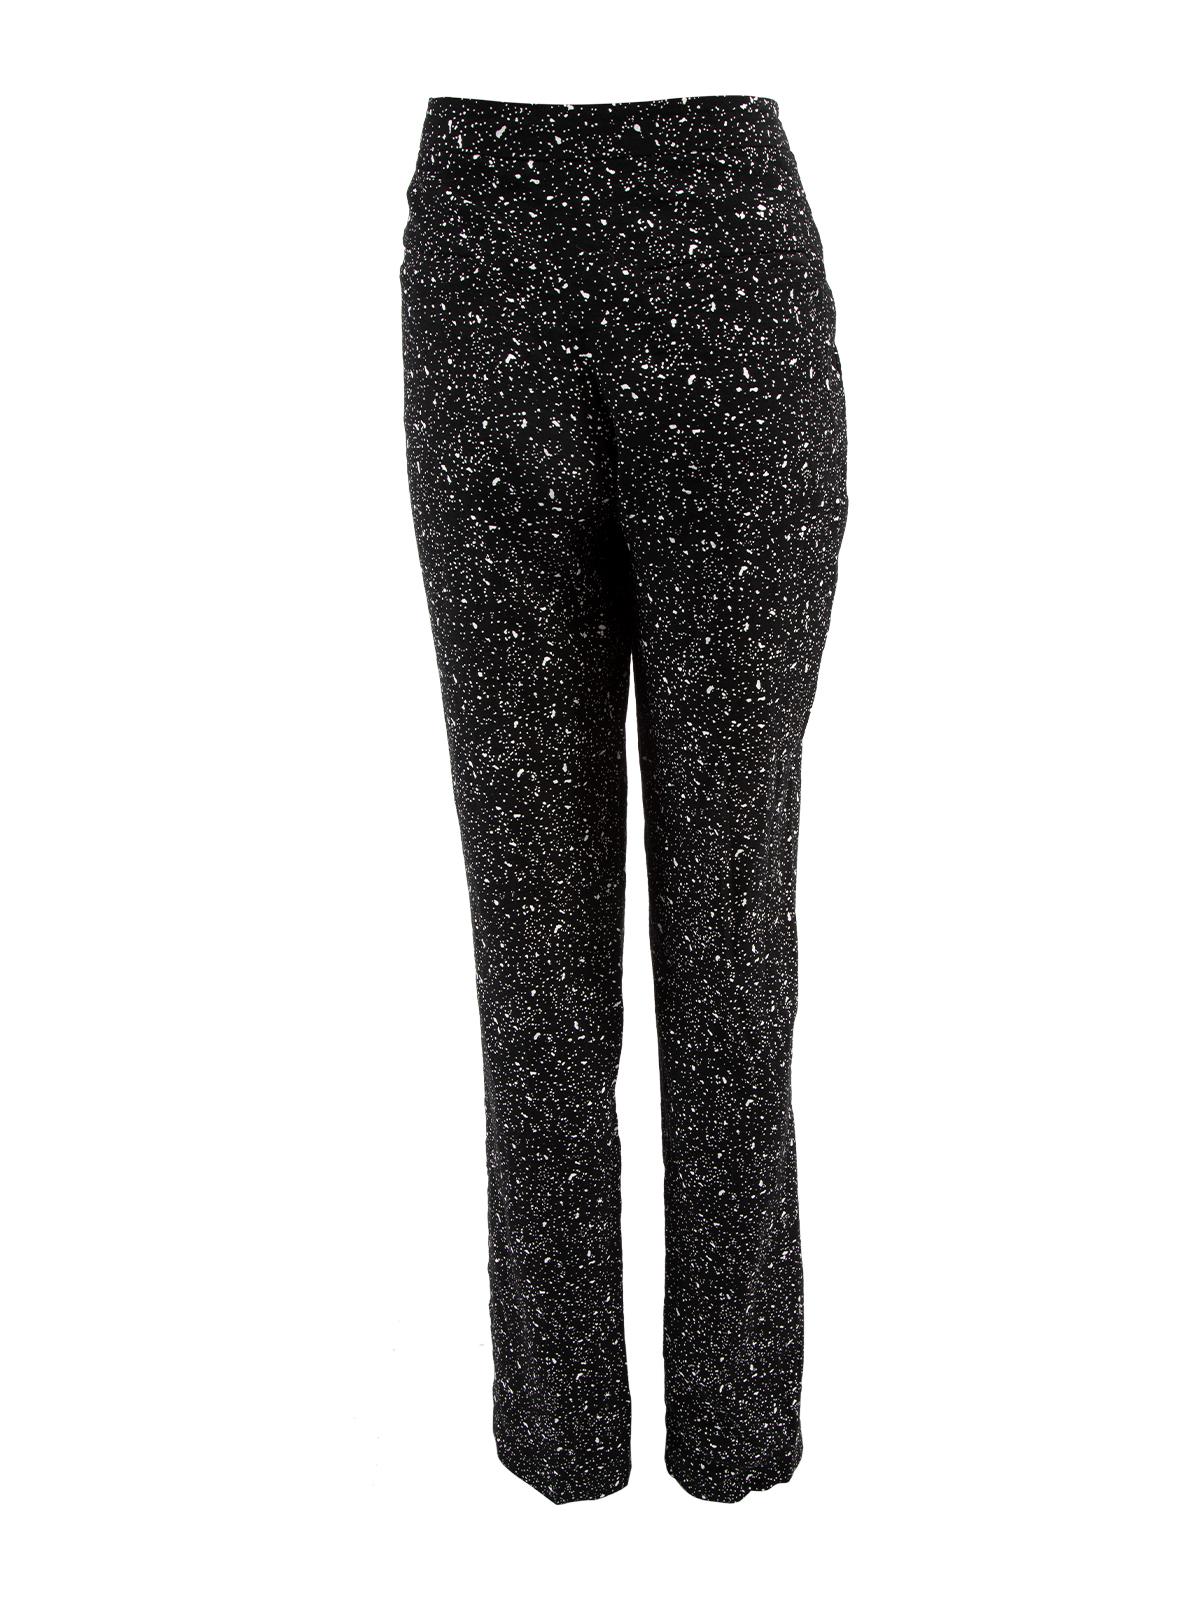 Pre-Loved Diane Von Furstenberg Women's Martine Galaxy Trousers In Excellent Condition For Sale In London, GB